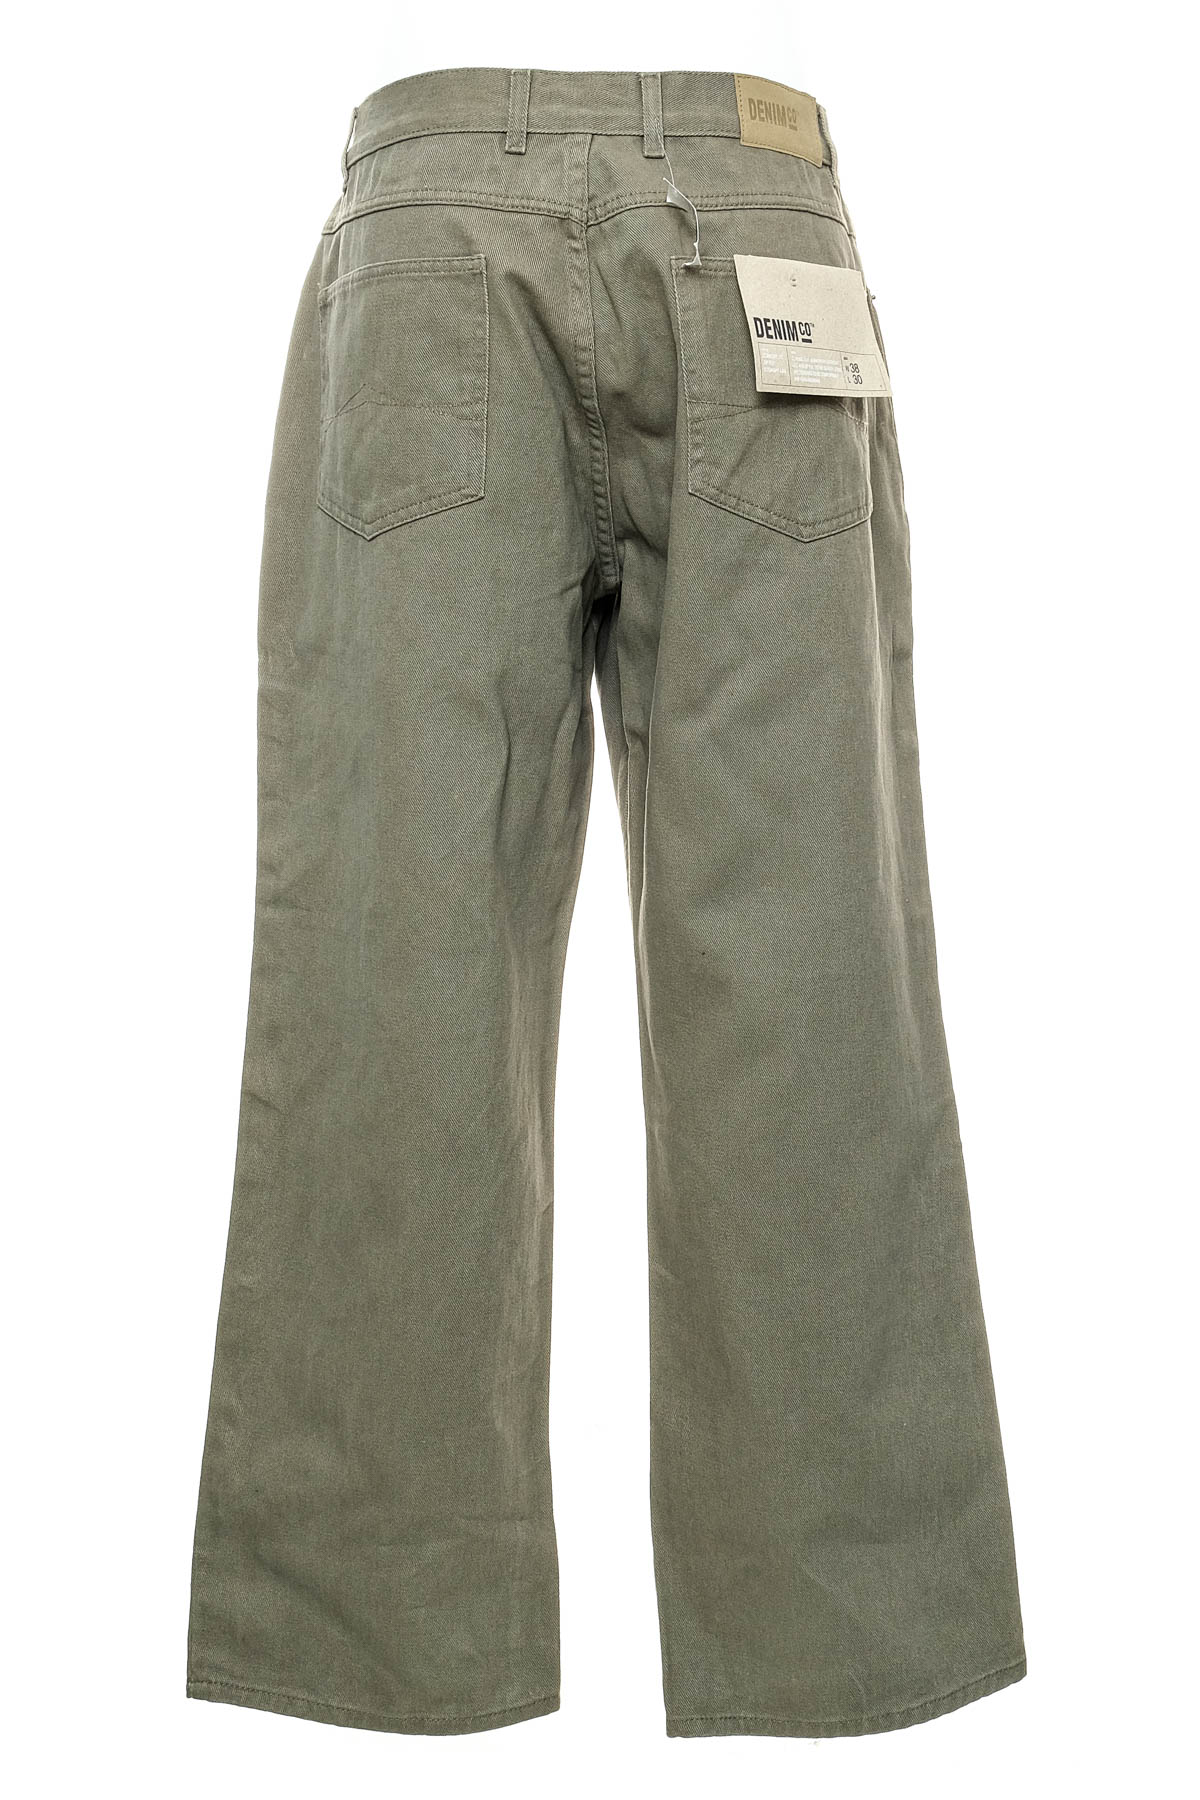 Men's trousers - Denim Co - 1